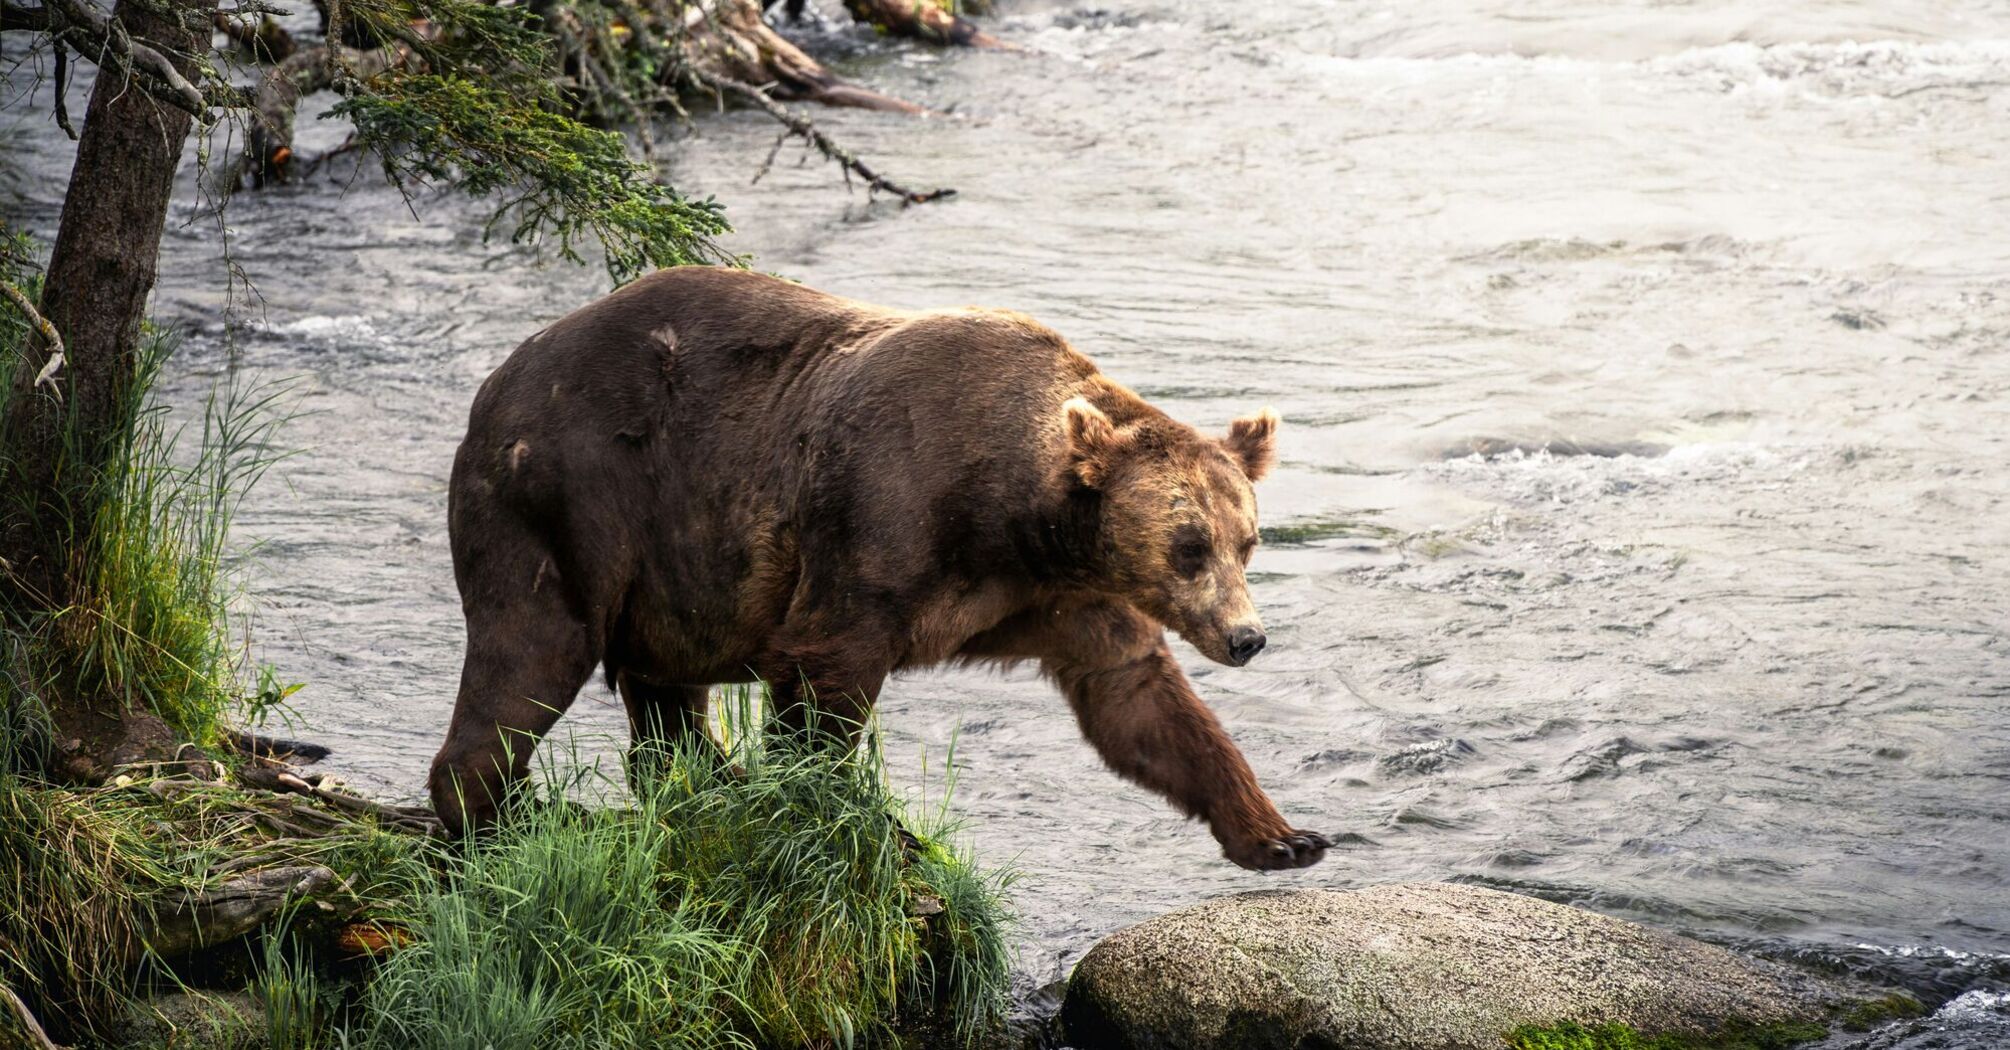 a large brown bear walking across a river